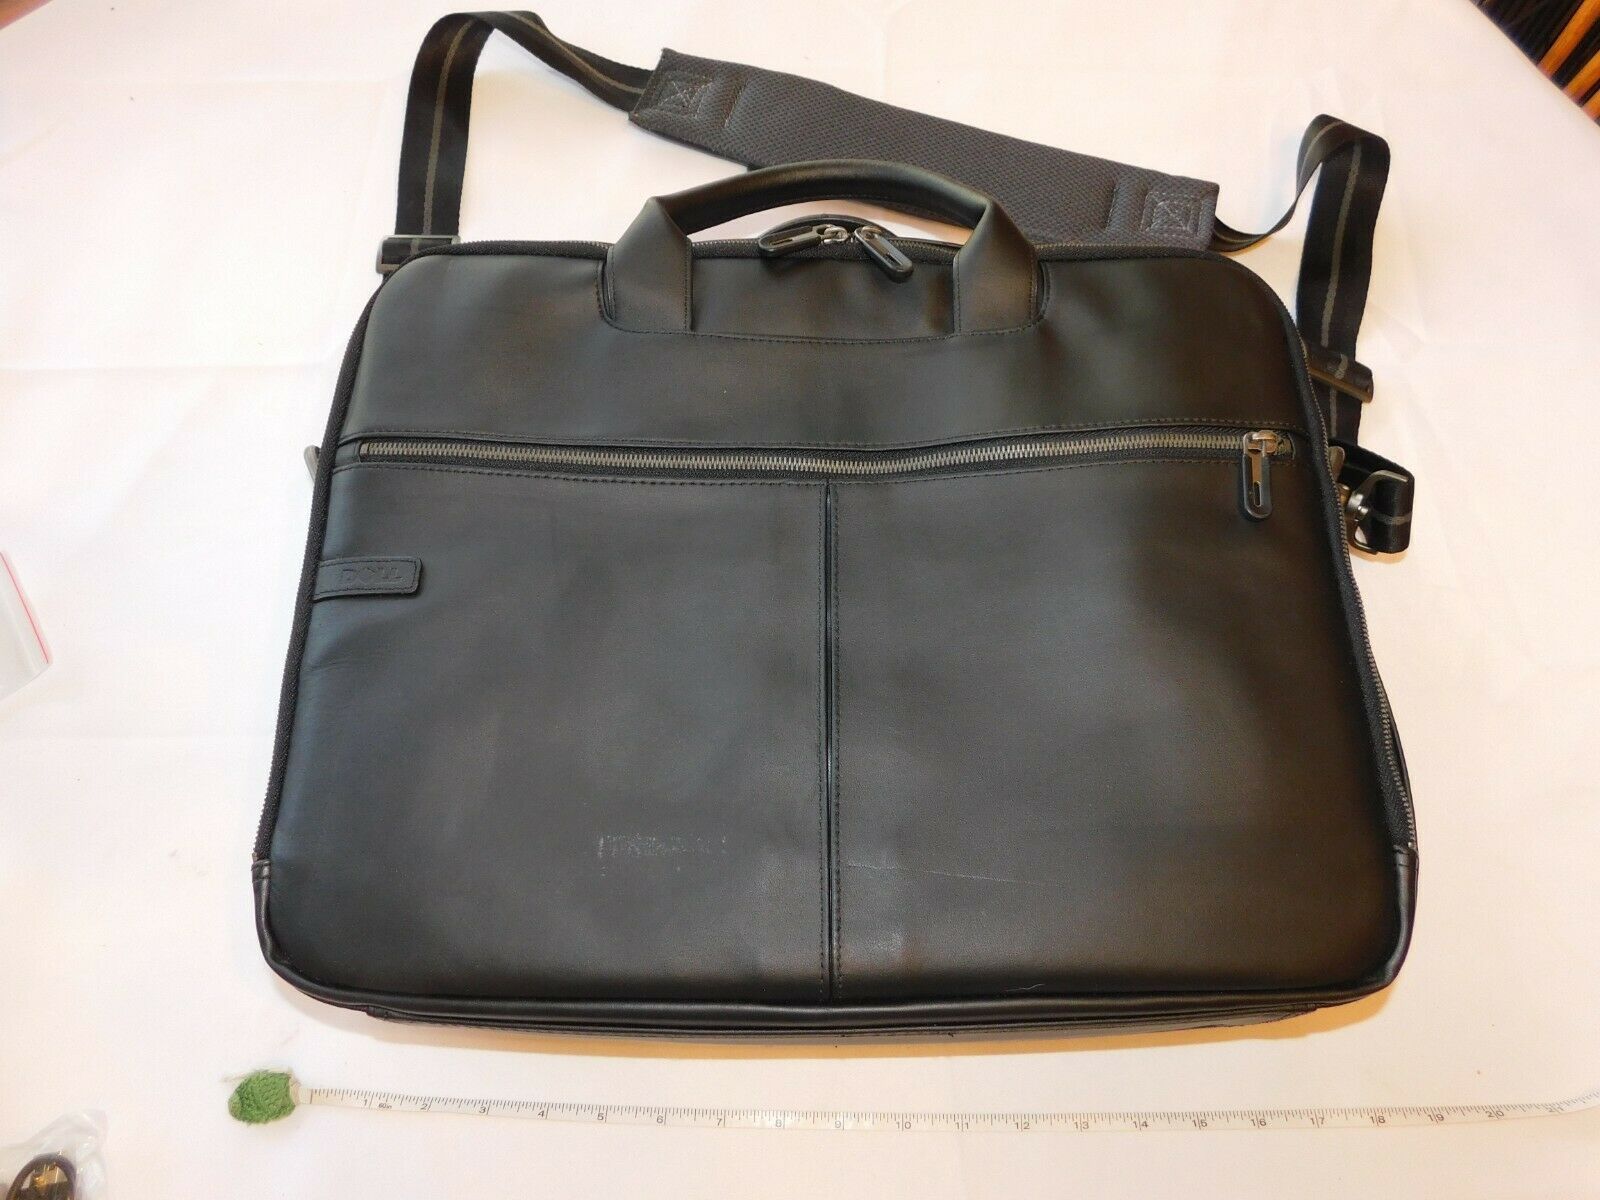 Primary image for Dell Laptop Computer Tablet Organizer Shoulder Bag Carrying Case travel Black